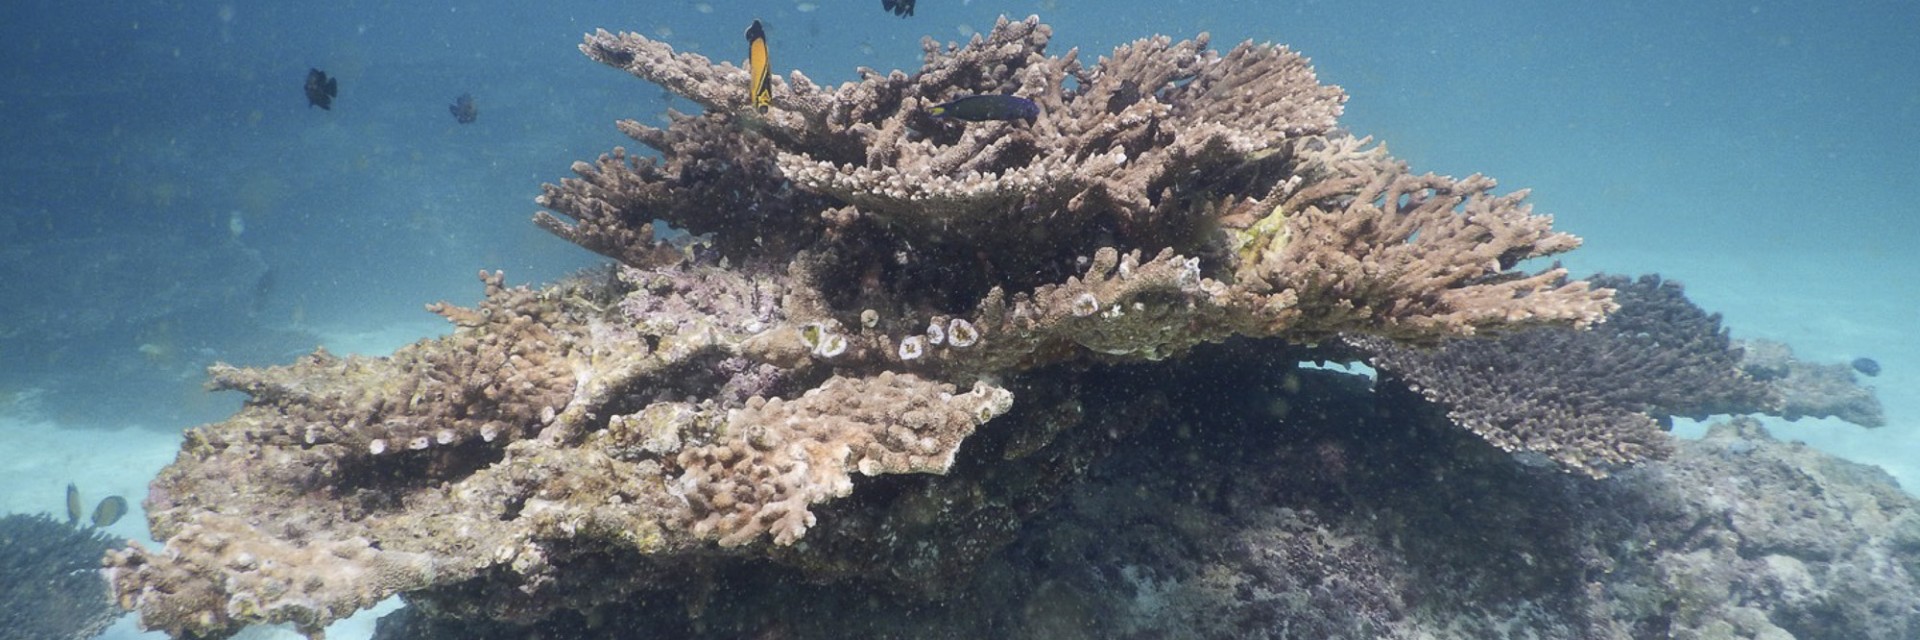 Oman barriera corallina